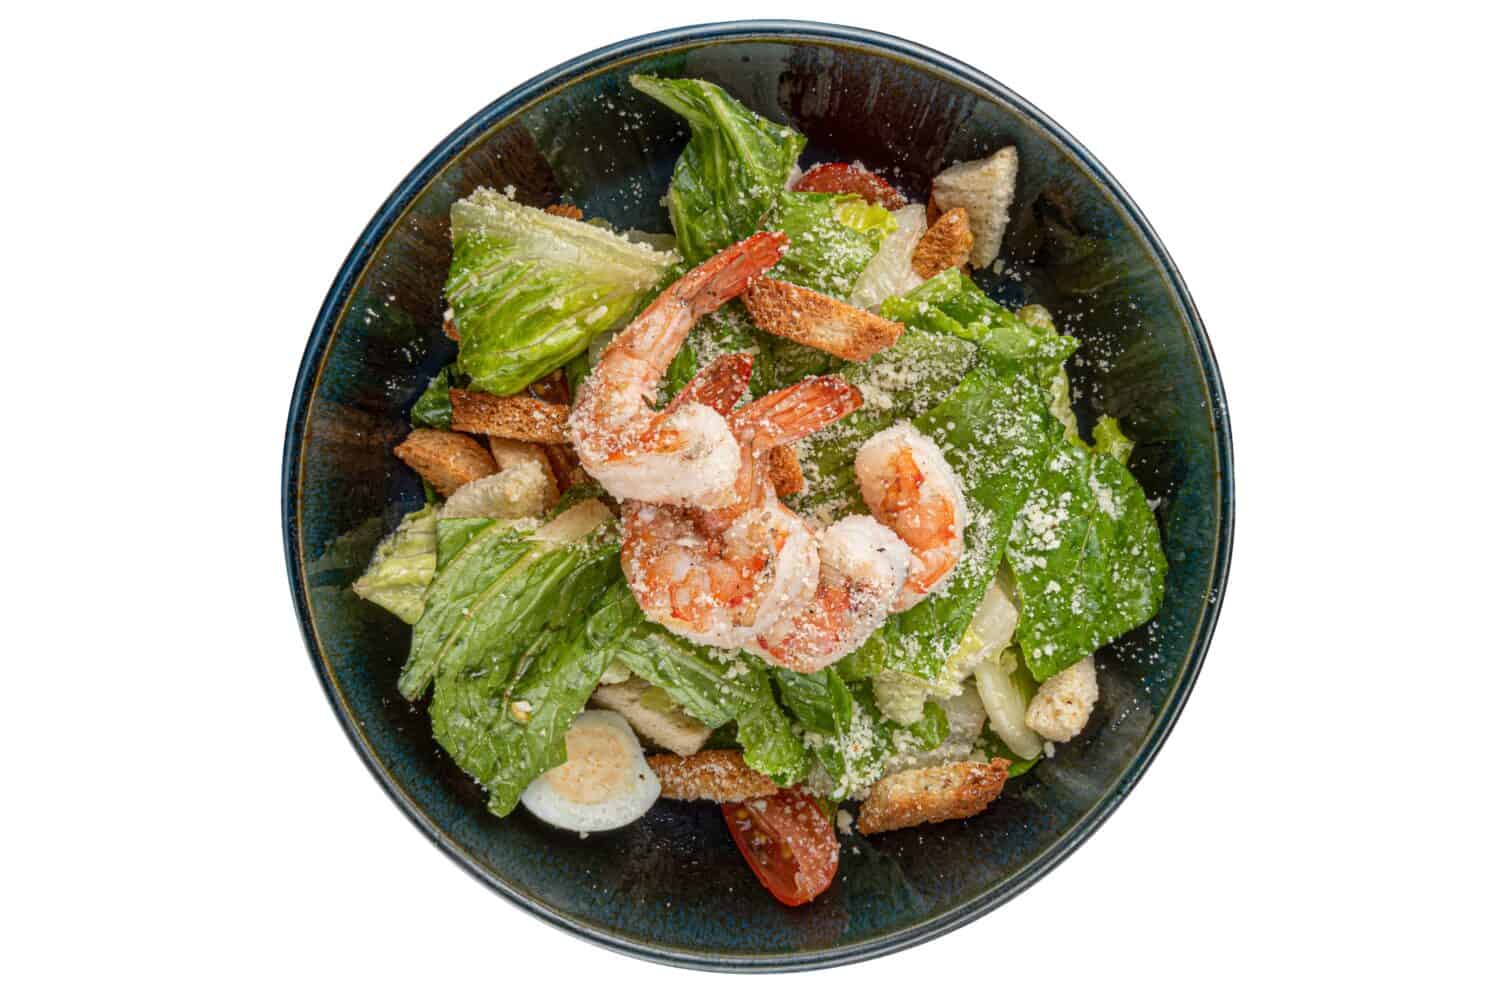 Shrimp Salad. Seafood Caesar Salad served with croutons, shrimps, salad leaf and parmesan on black background. Italian caesar salad.Top view, copy space.